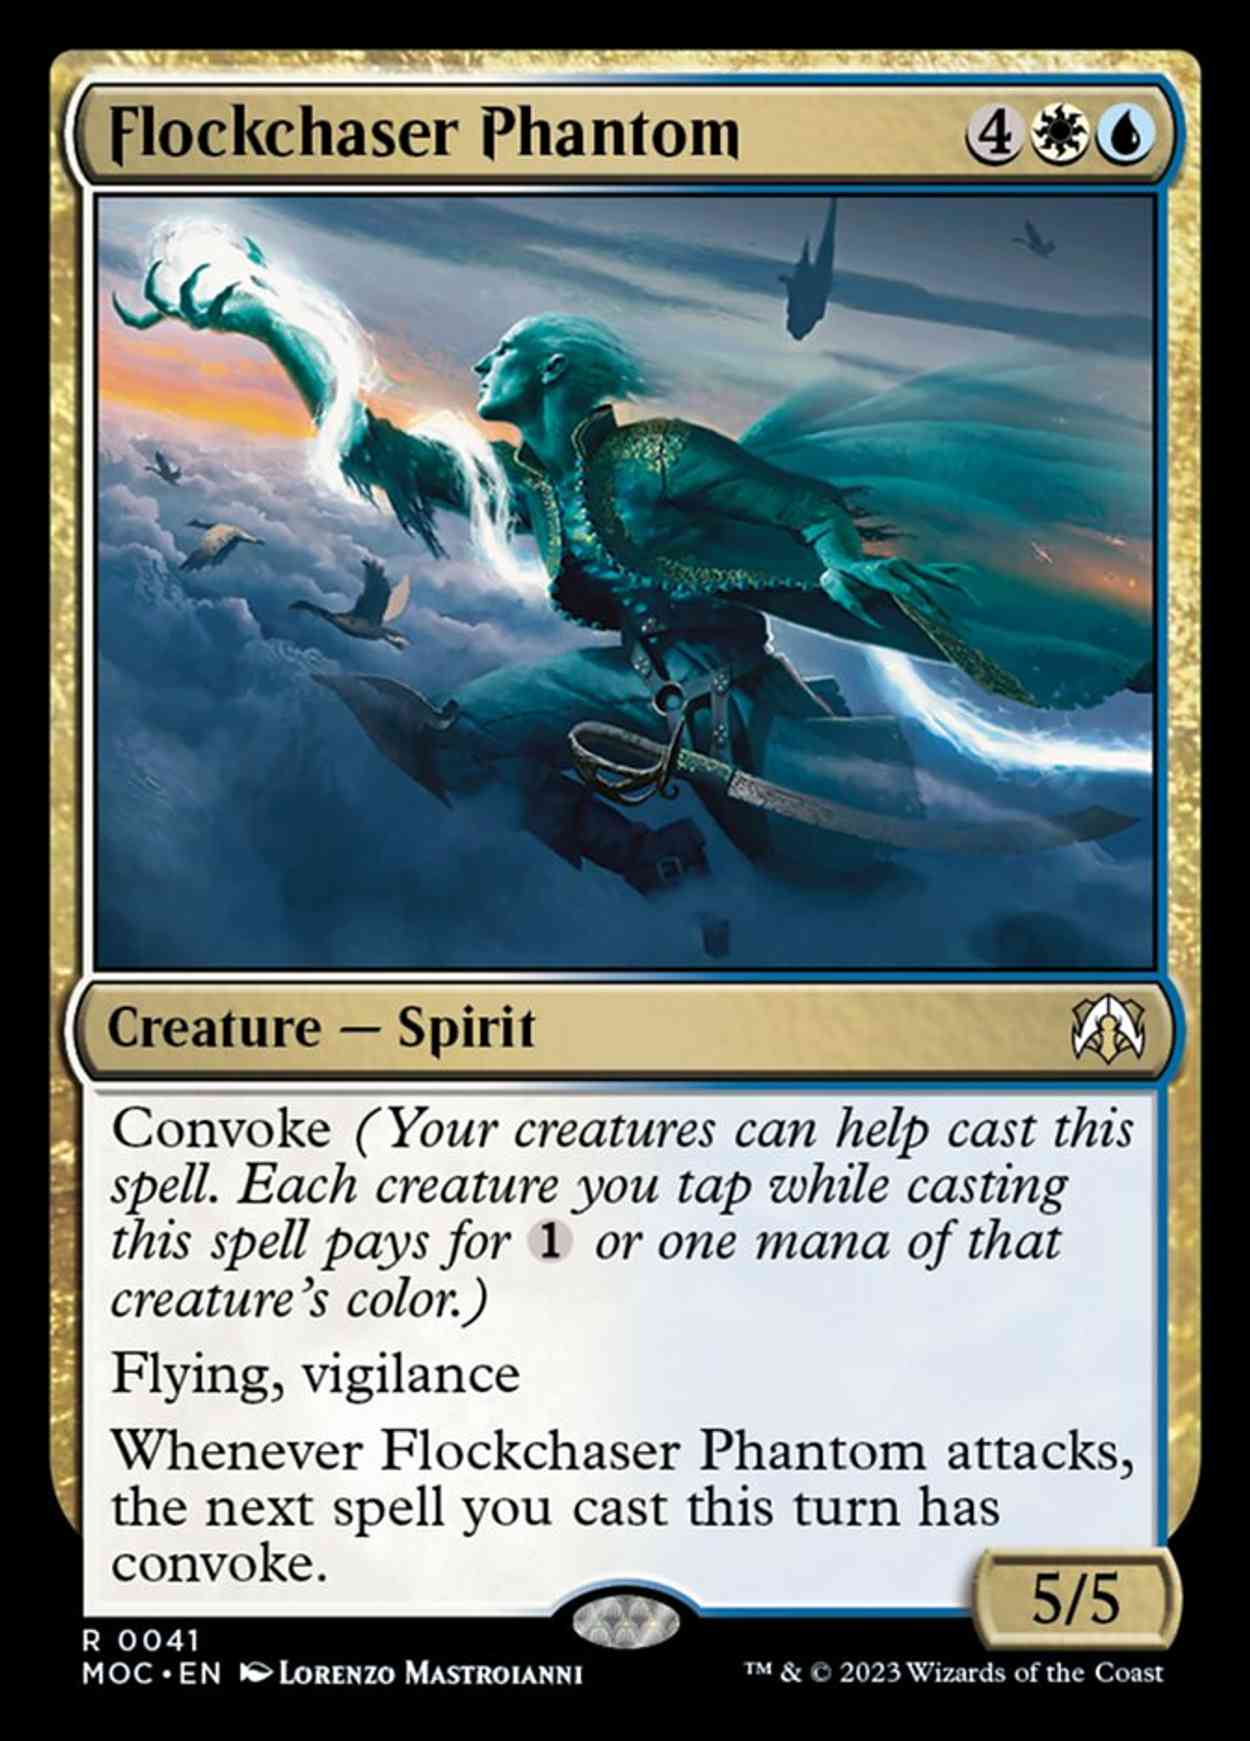 Flockchaser Phantom magic card front